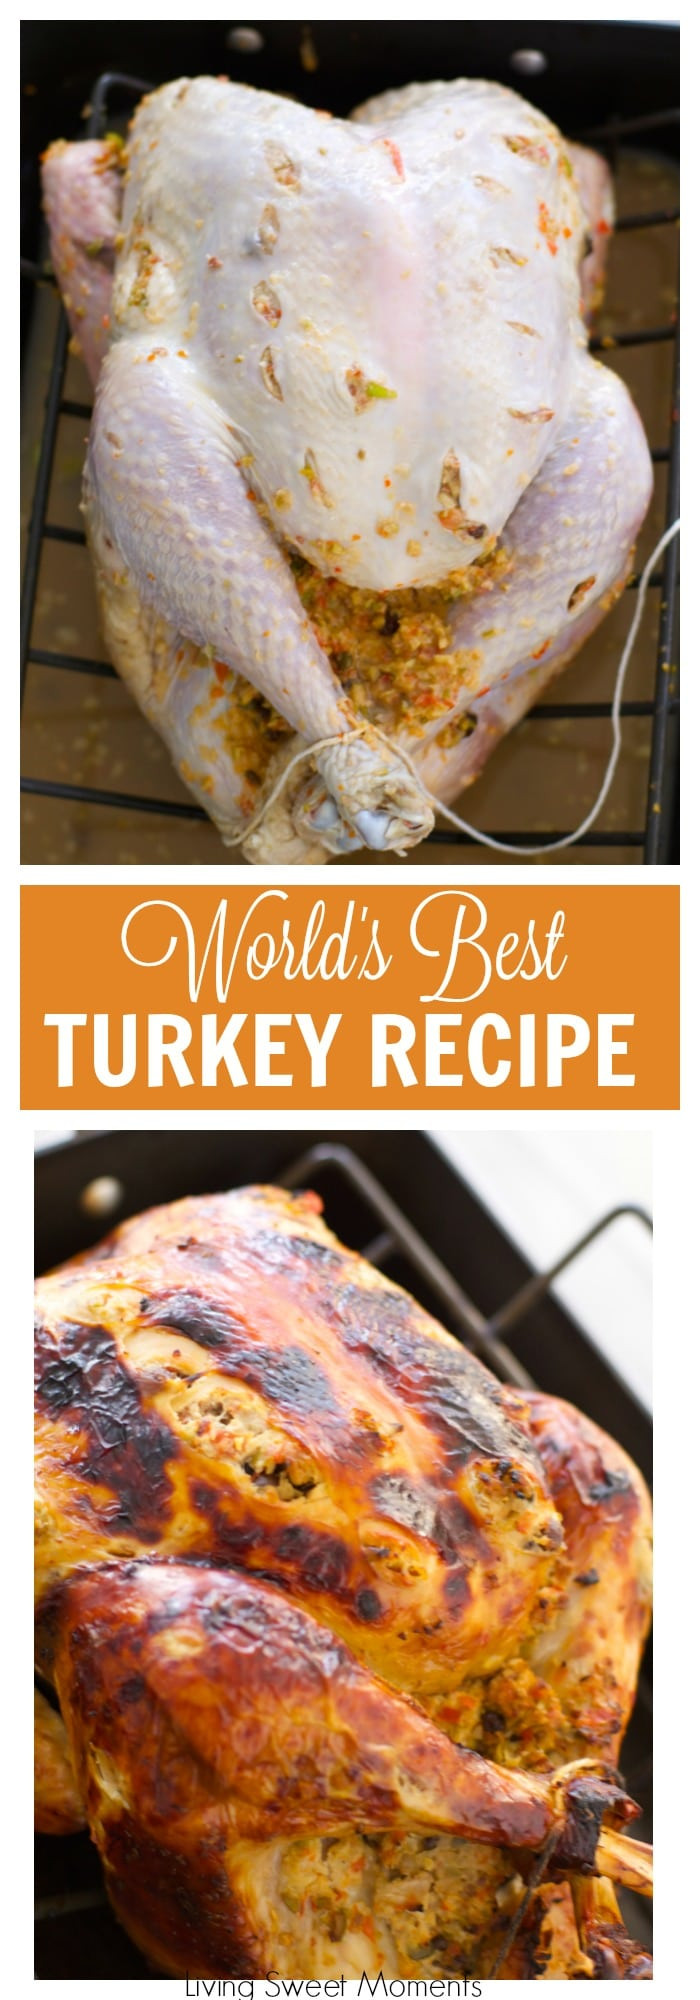 The Best Thanksgiving Turkey
 The World s Best Turkey Recipe A Tutorial Living Sweet